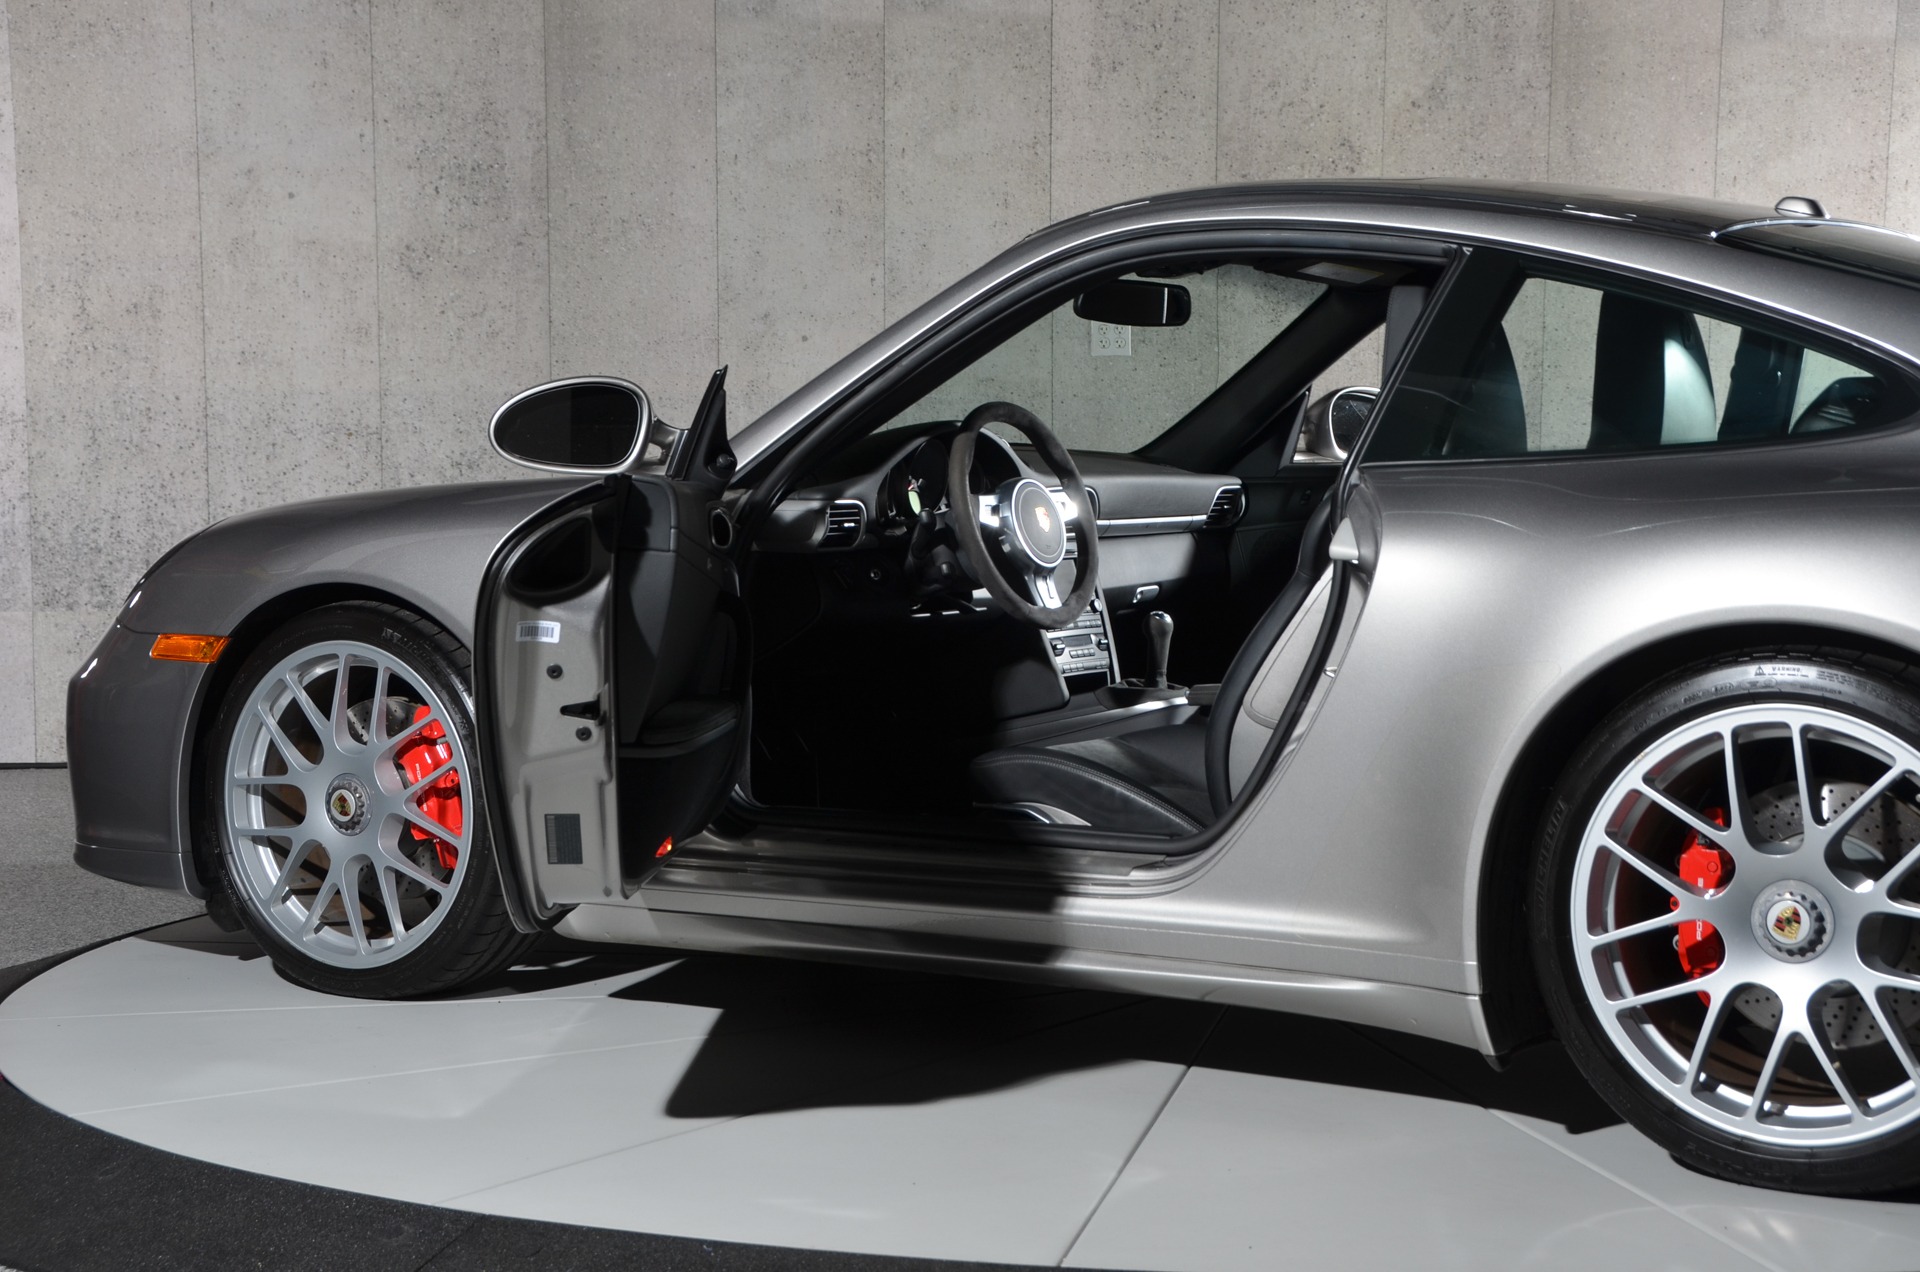 Used 2012 Porsche 911 Carrera 4 GTS For Sale ($147,500) | Ryan Friedman  Motor Cars LLC Stock #1316